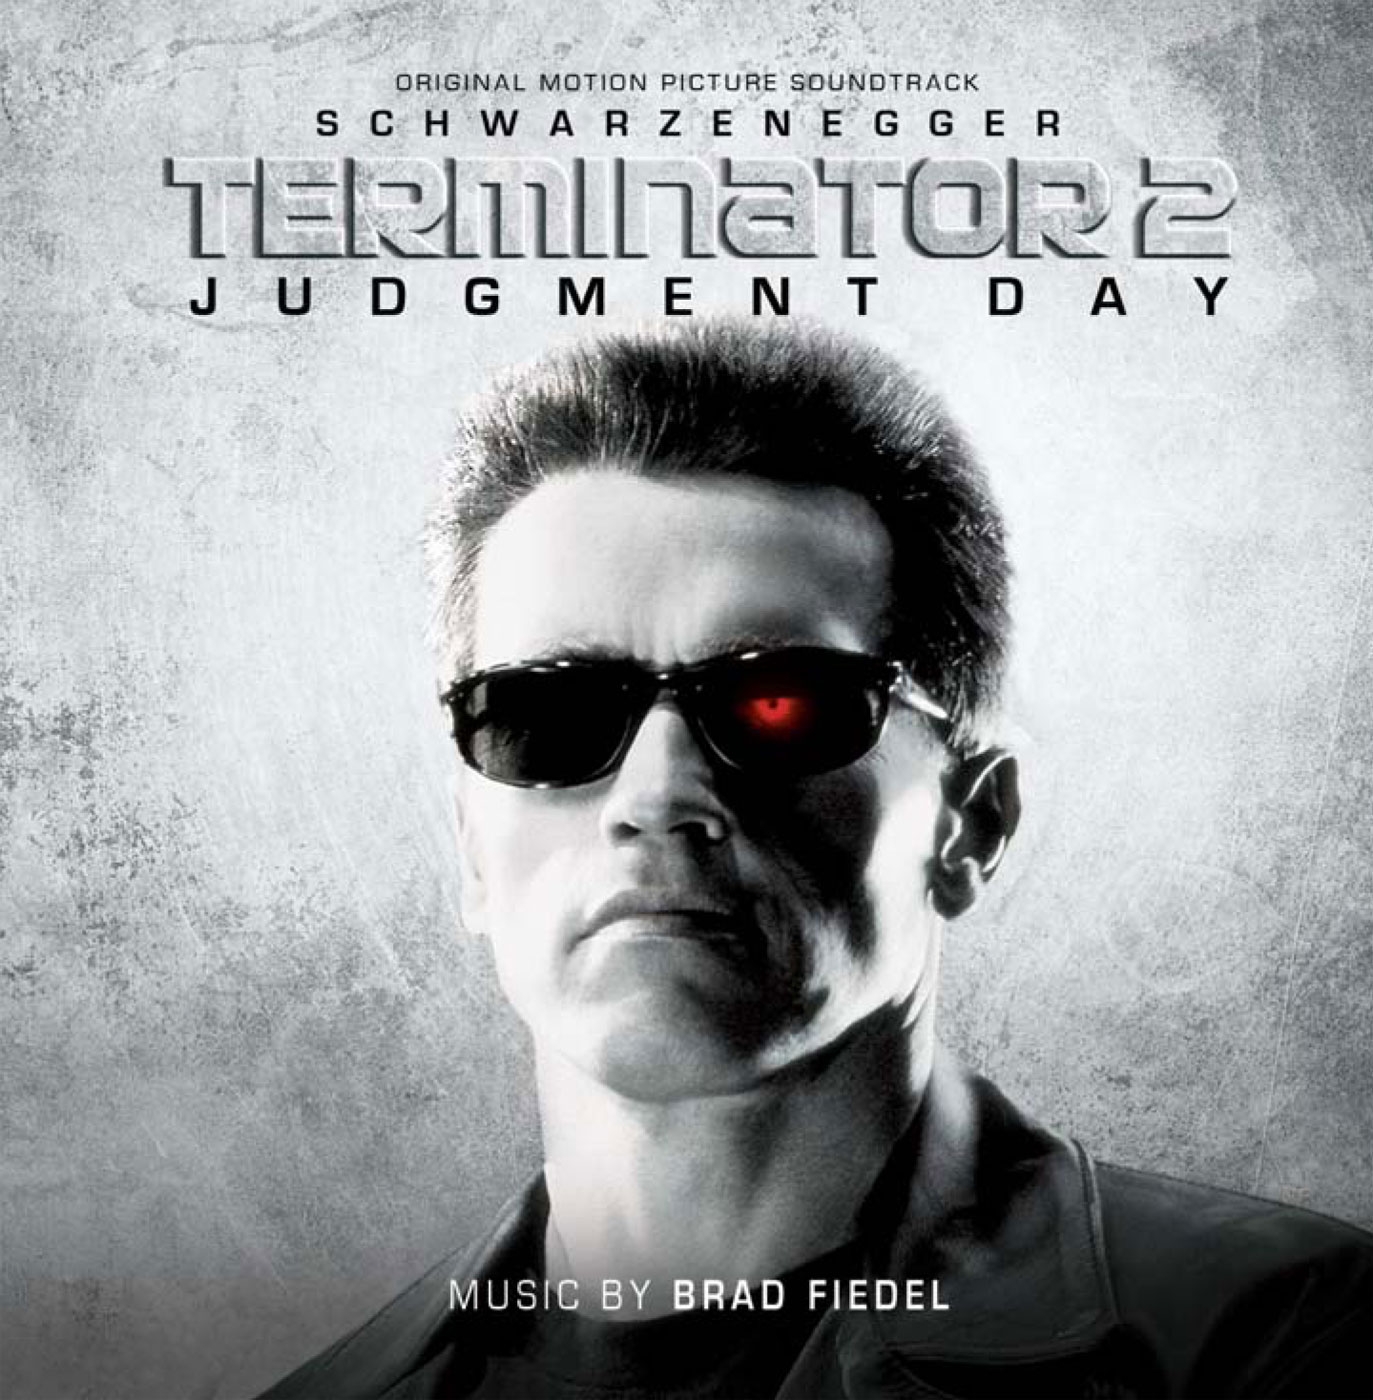 Terminator 2: Judgment Day HD wallpapers, Desktop wallpaper - most viewed